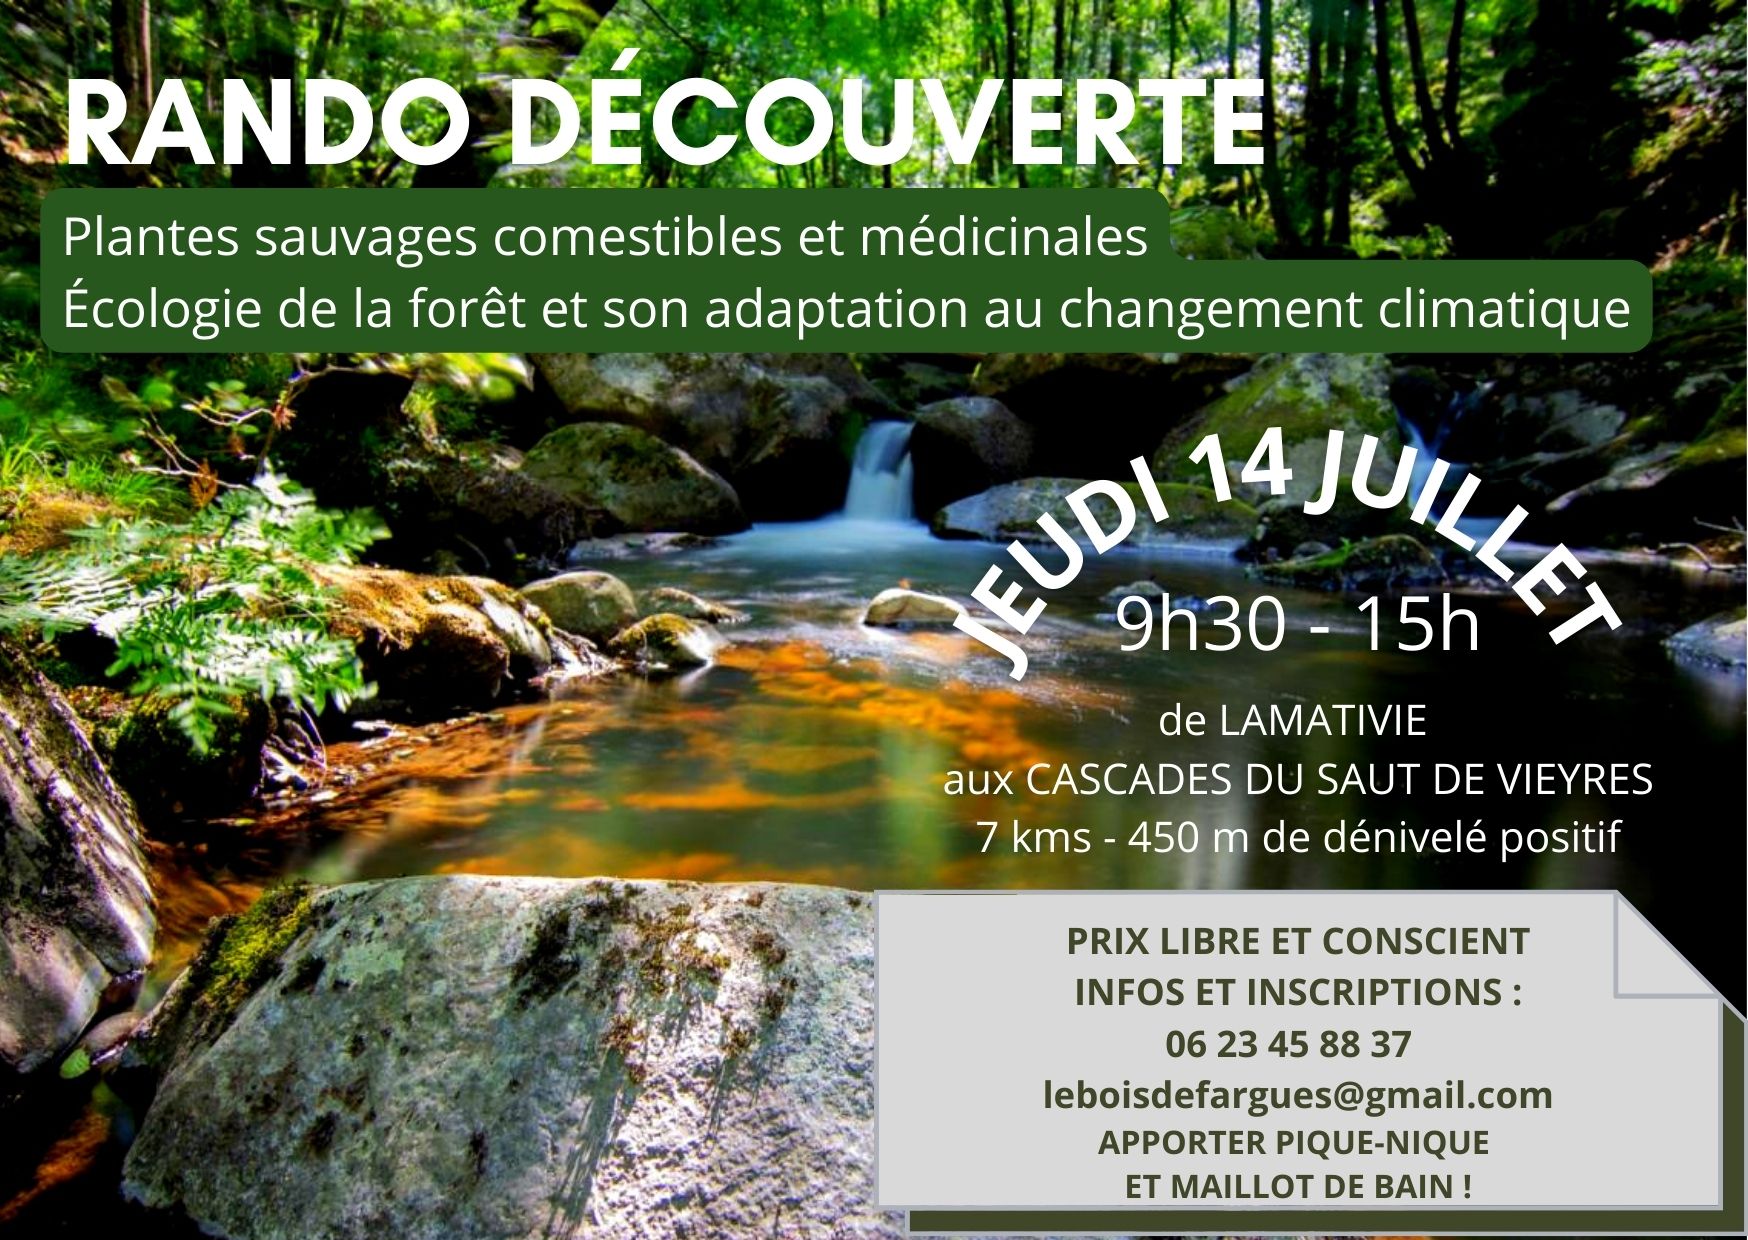 Rando découverte @ Lamativie | Teyssieu | Occitanie | France